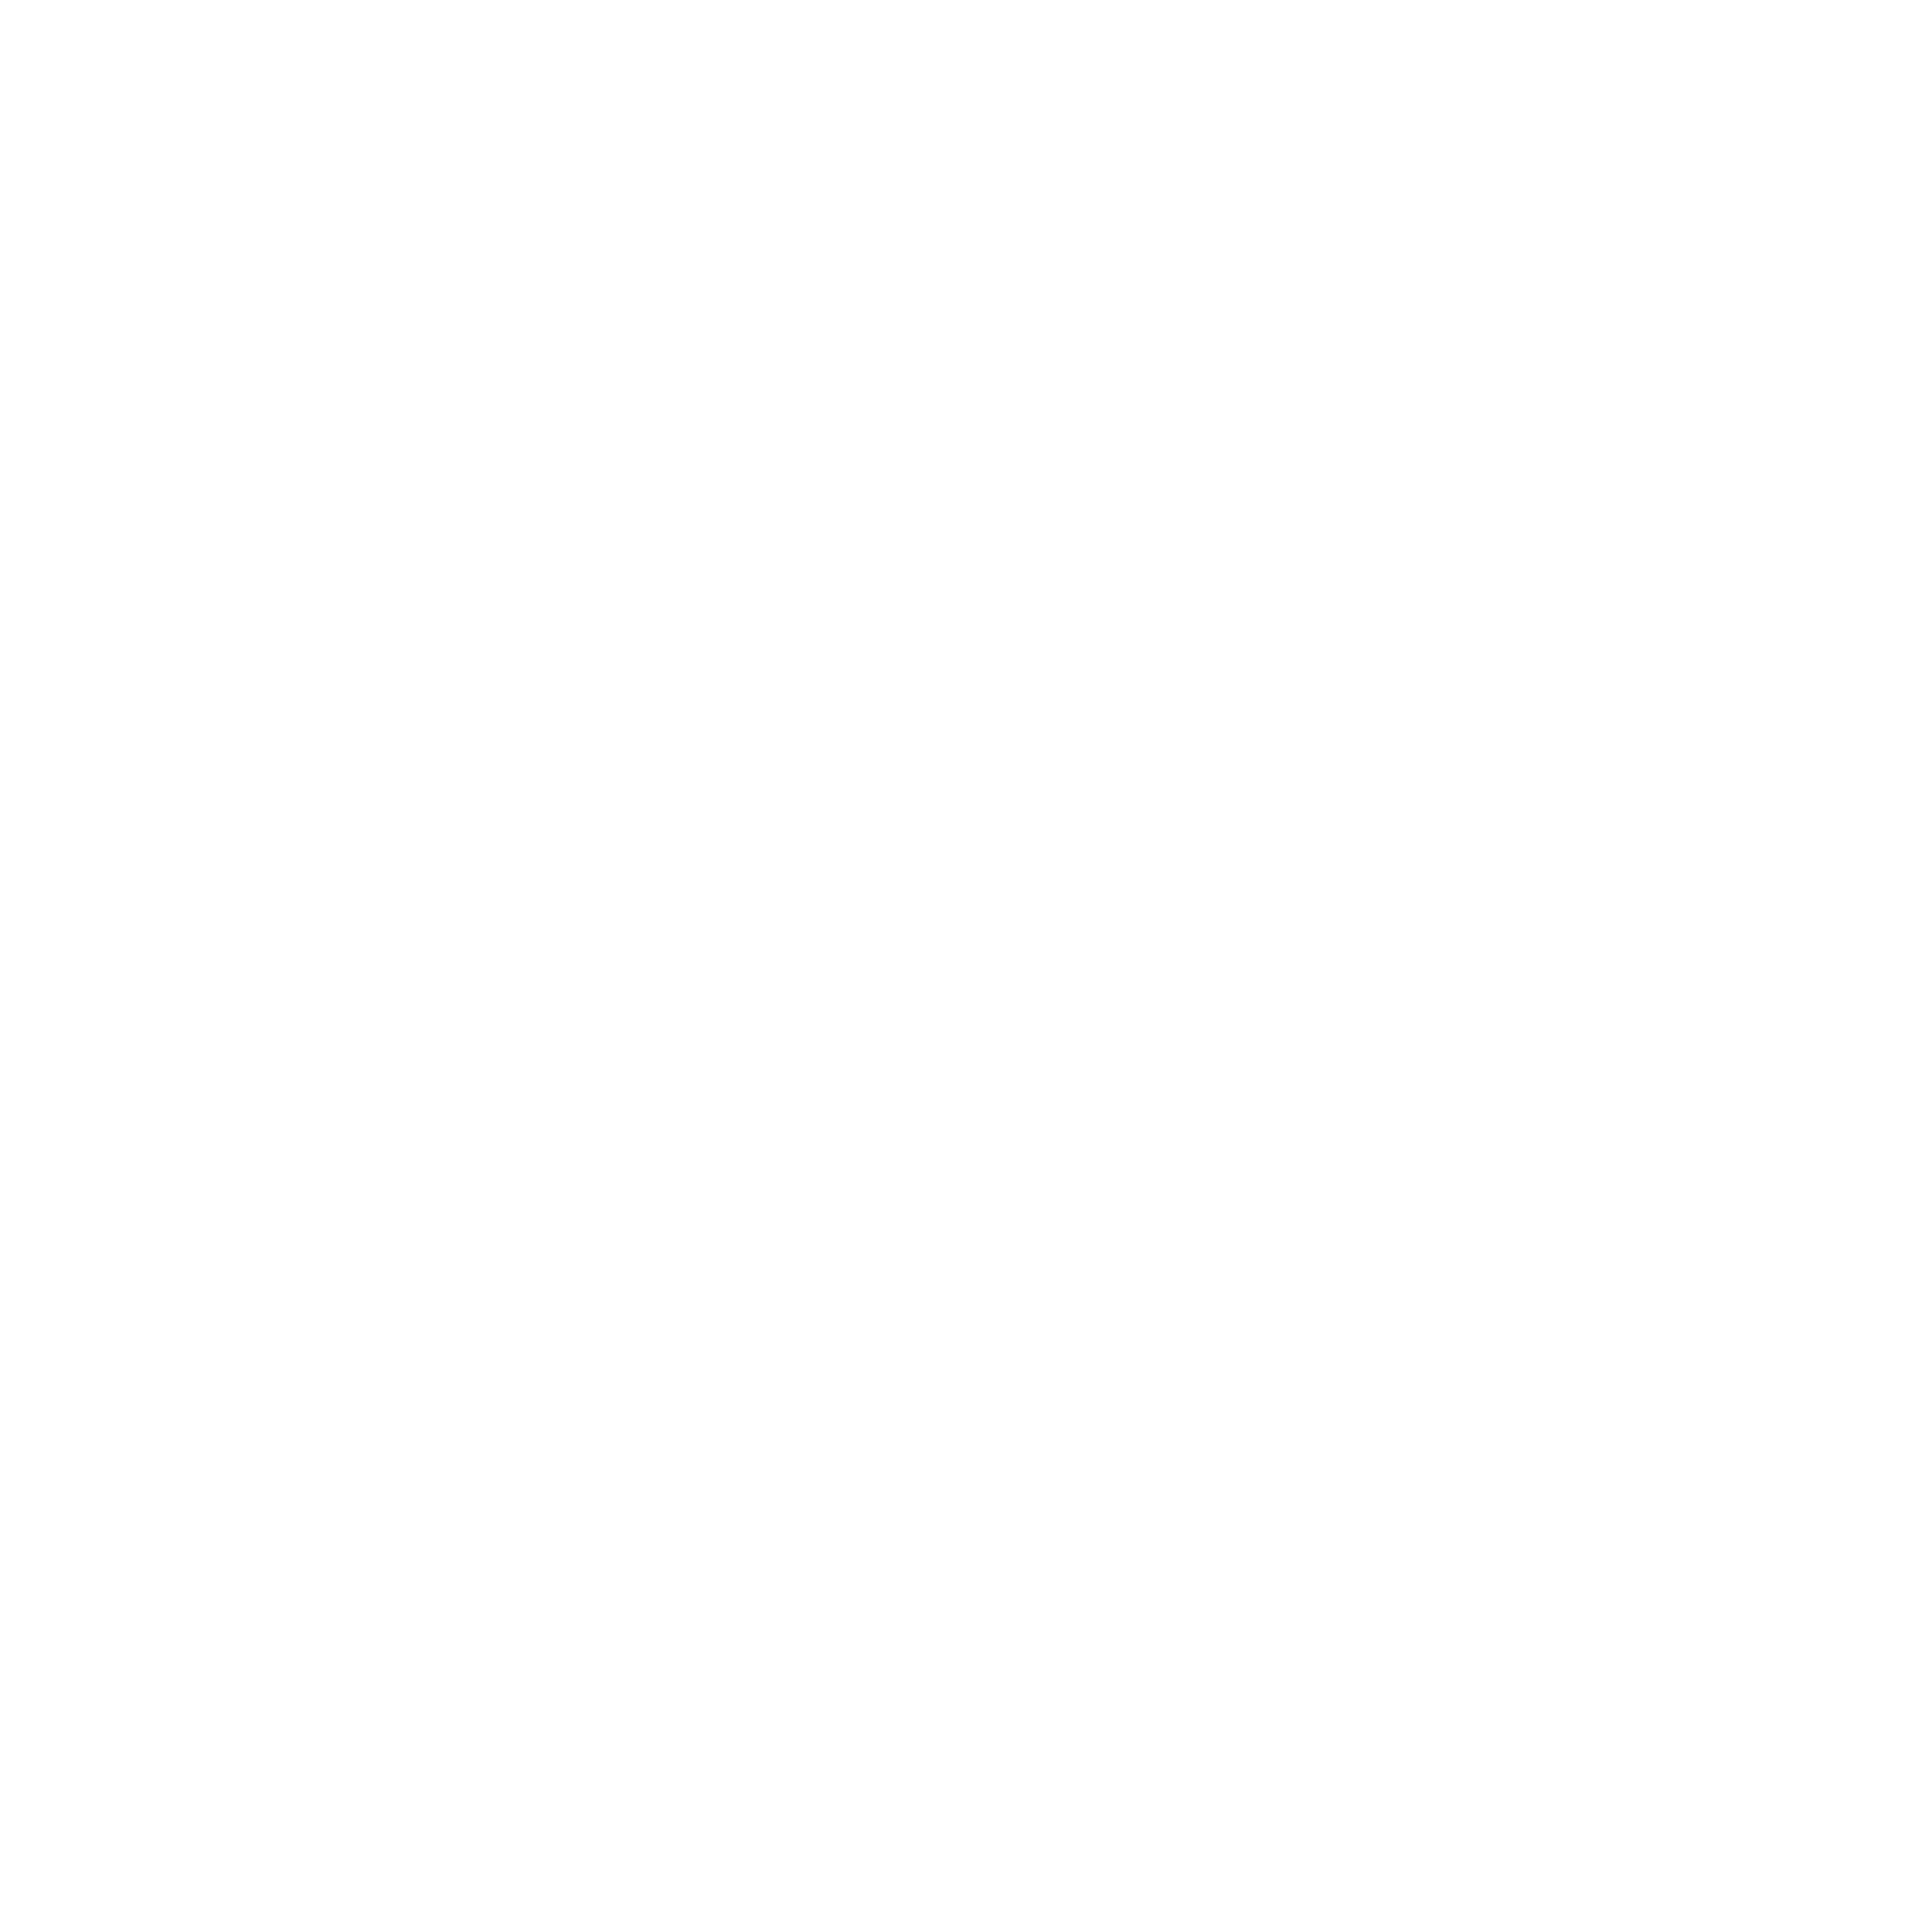 Hart-logos-black-trans10.png